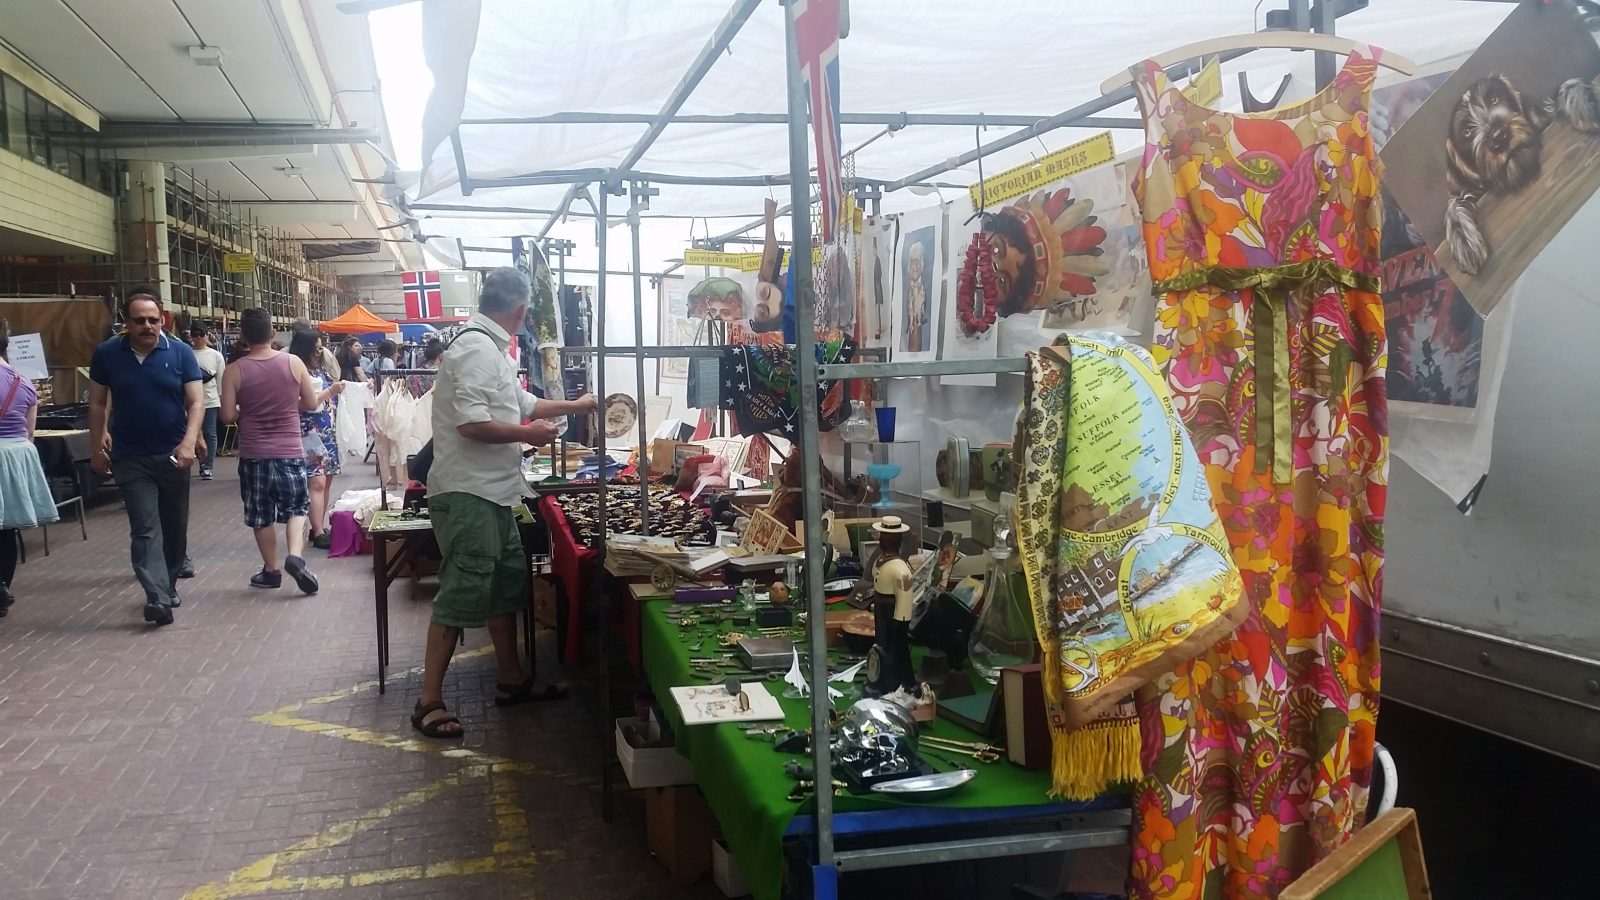 Antiques and Collectables at Portobello Green Market